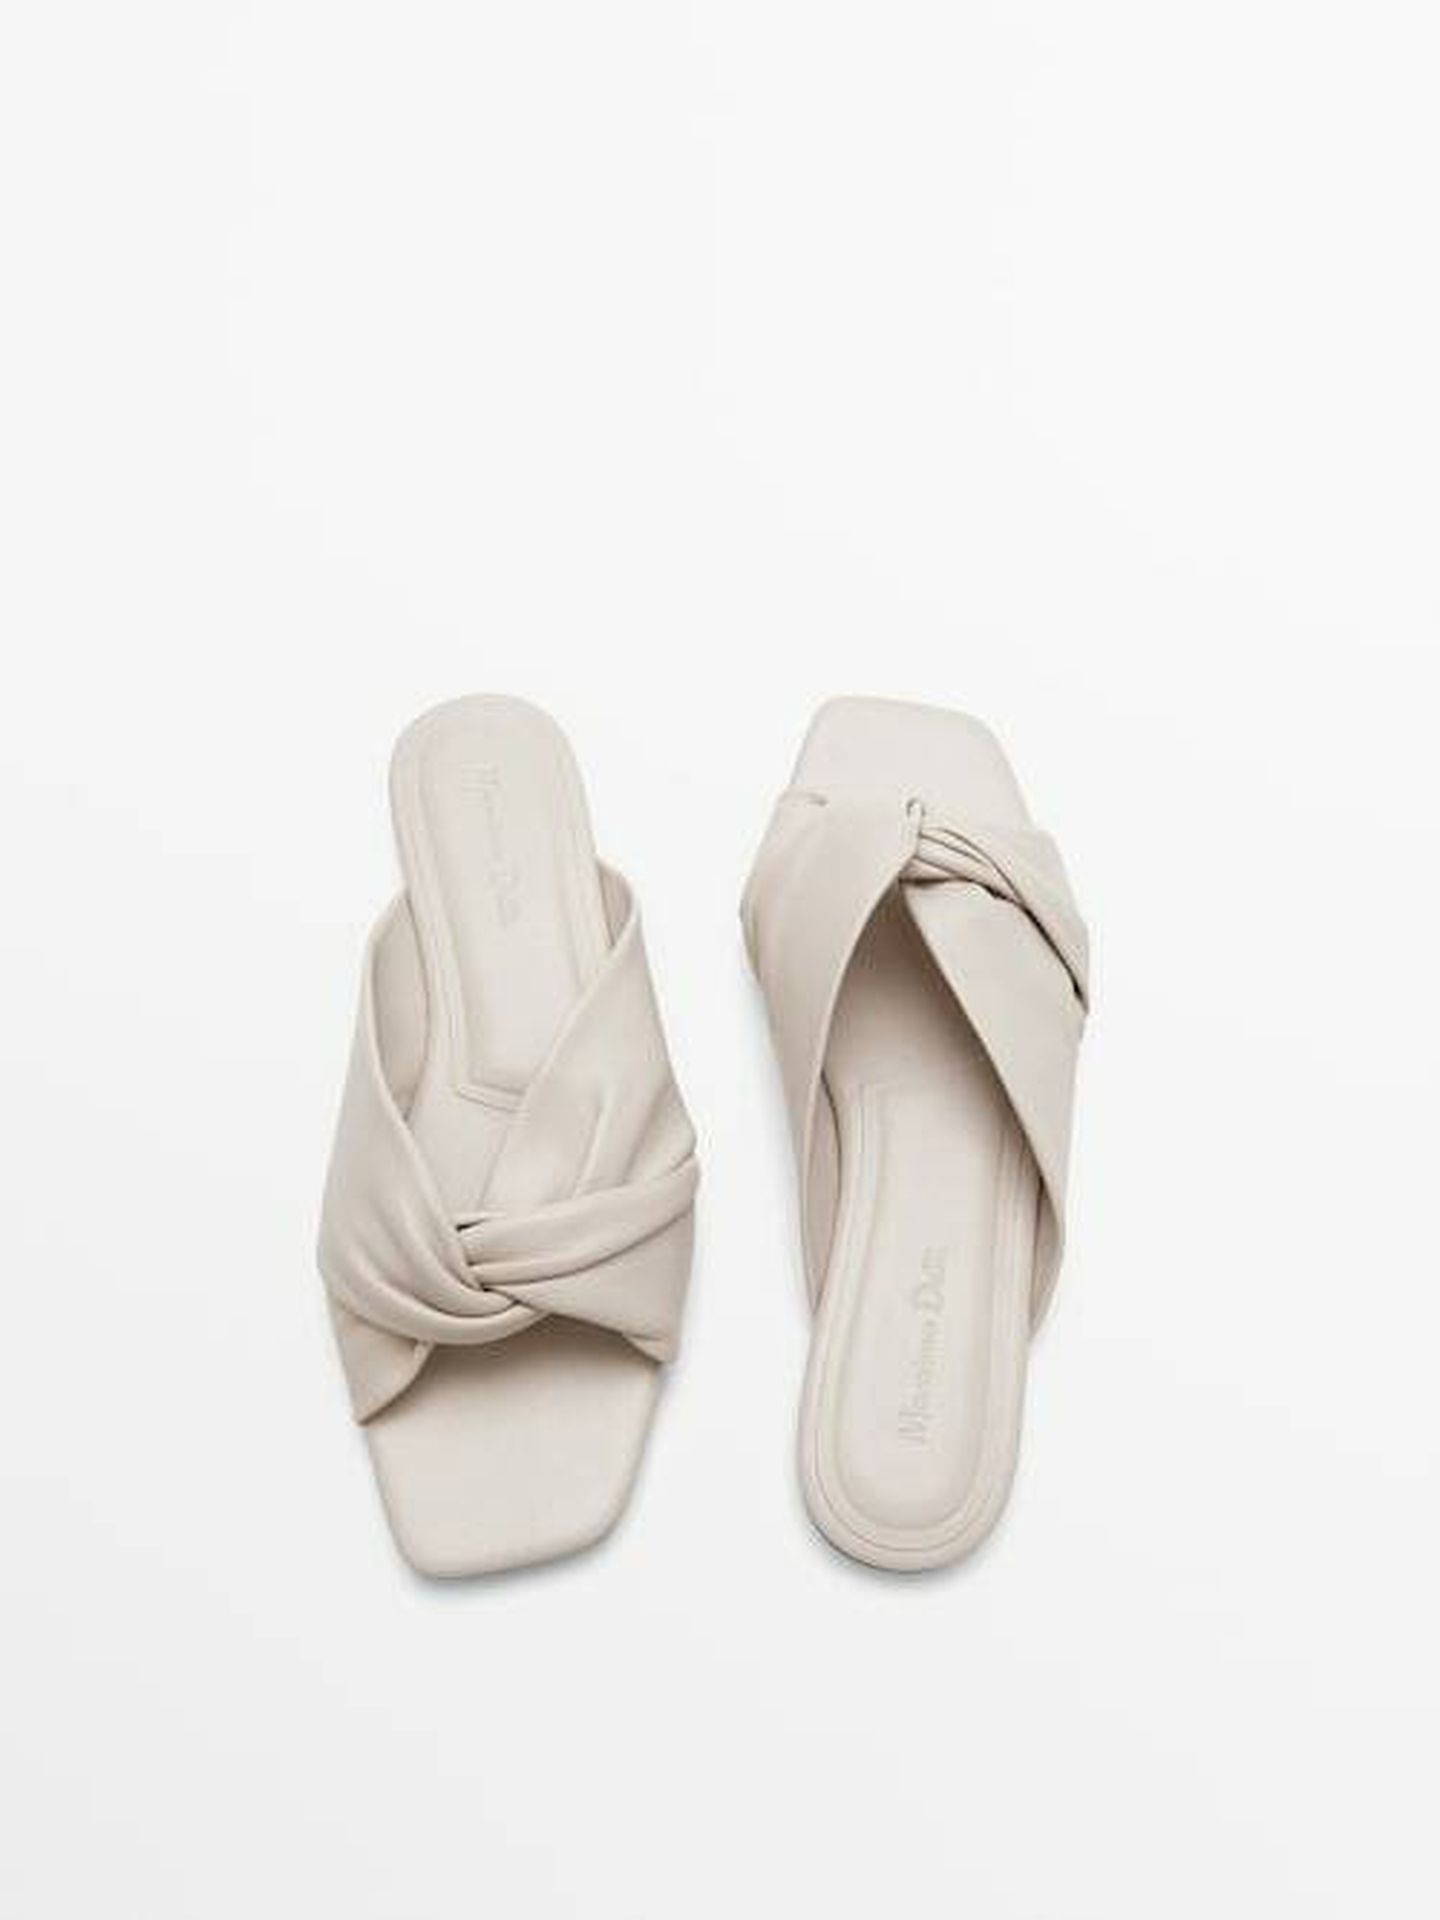 Las nuevas sandalias blancas de Massimo Dutti. (Cortesía)